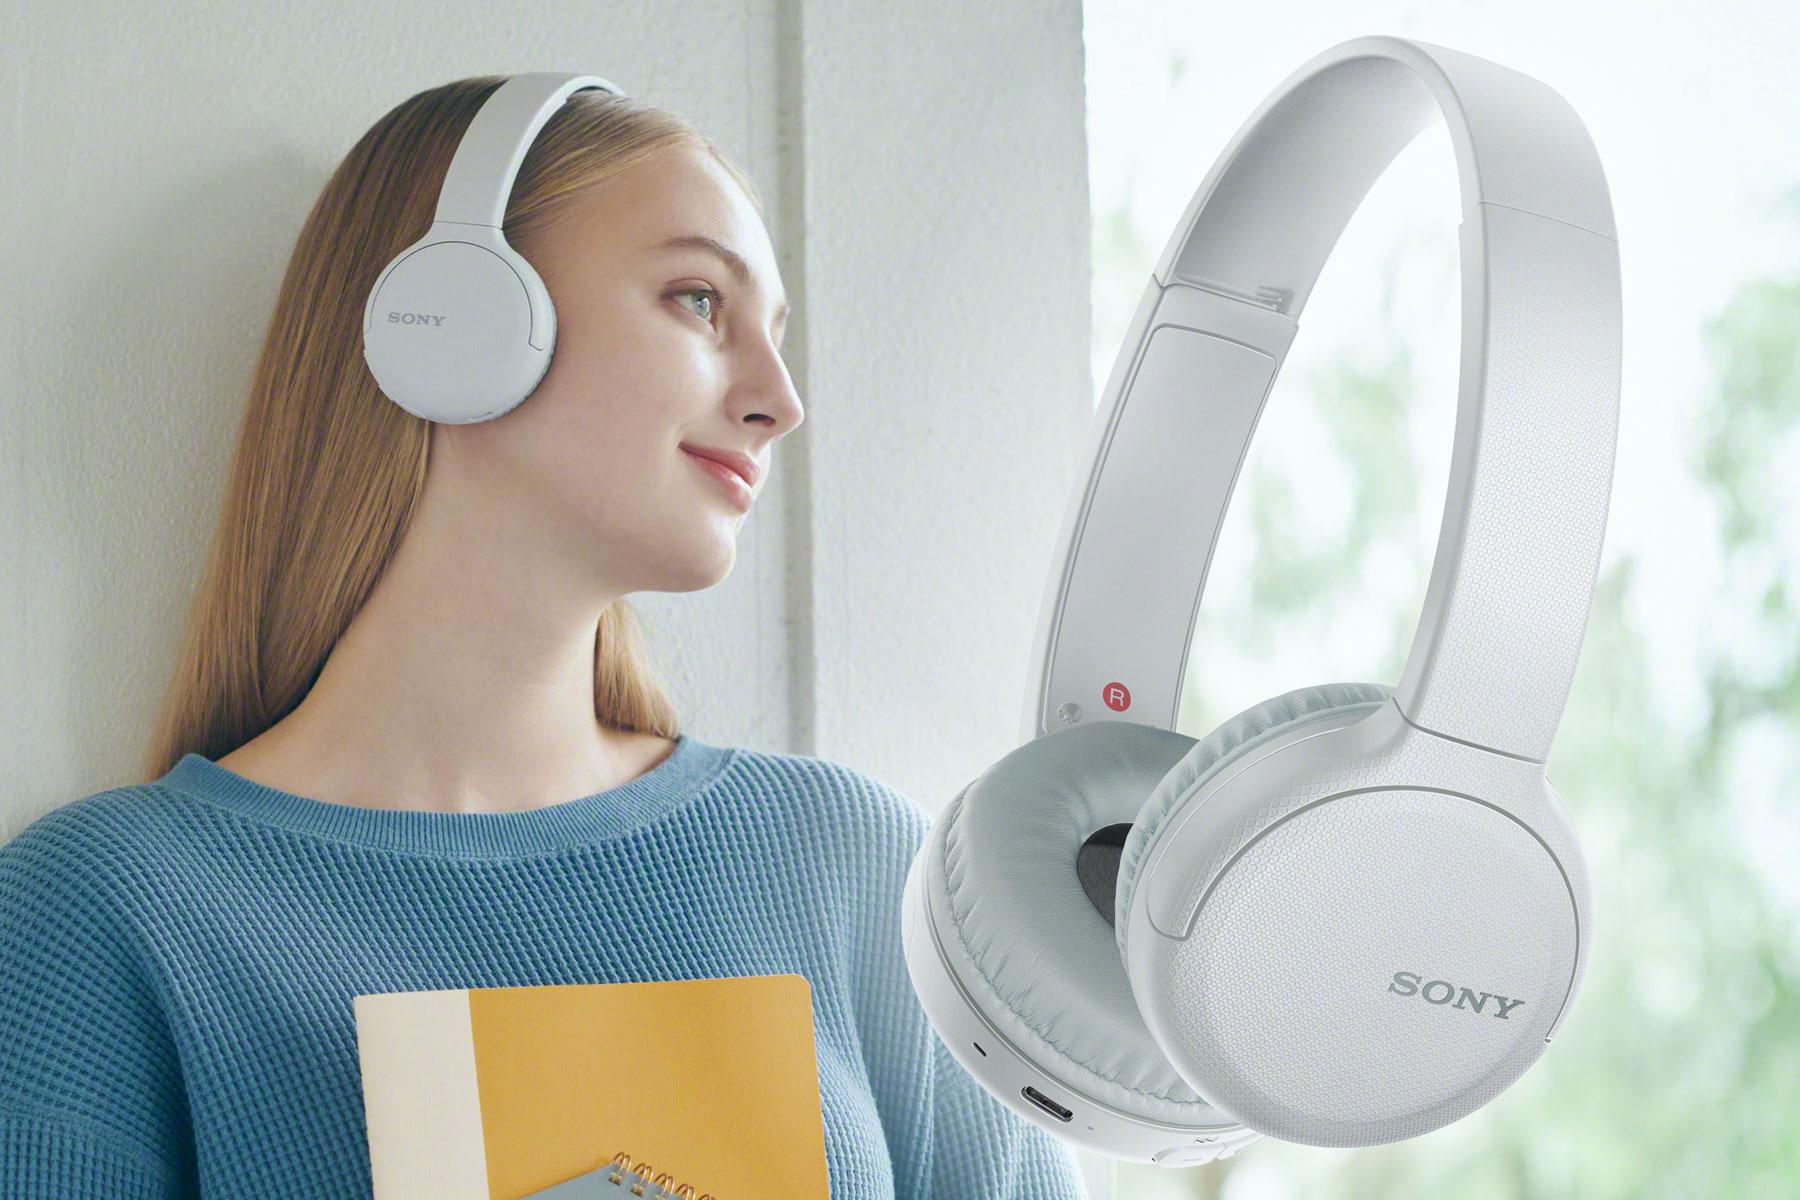 WH-CH510 Wireless On-Ear Headphones from Sony